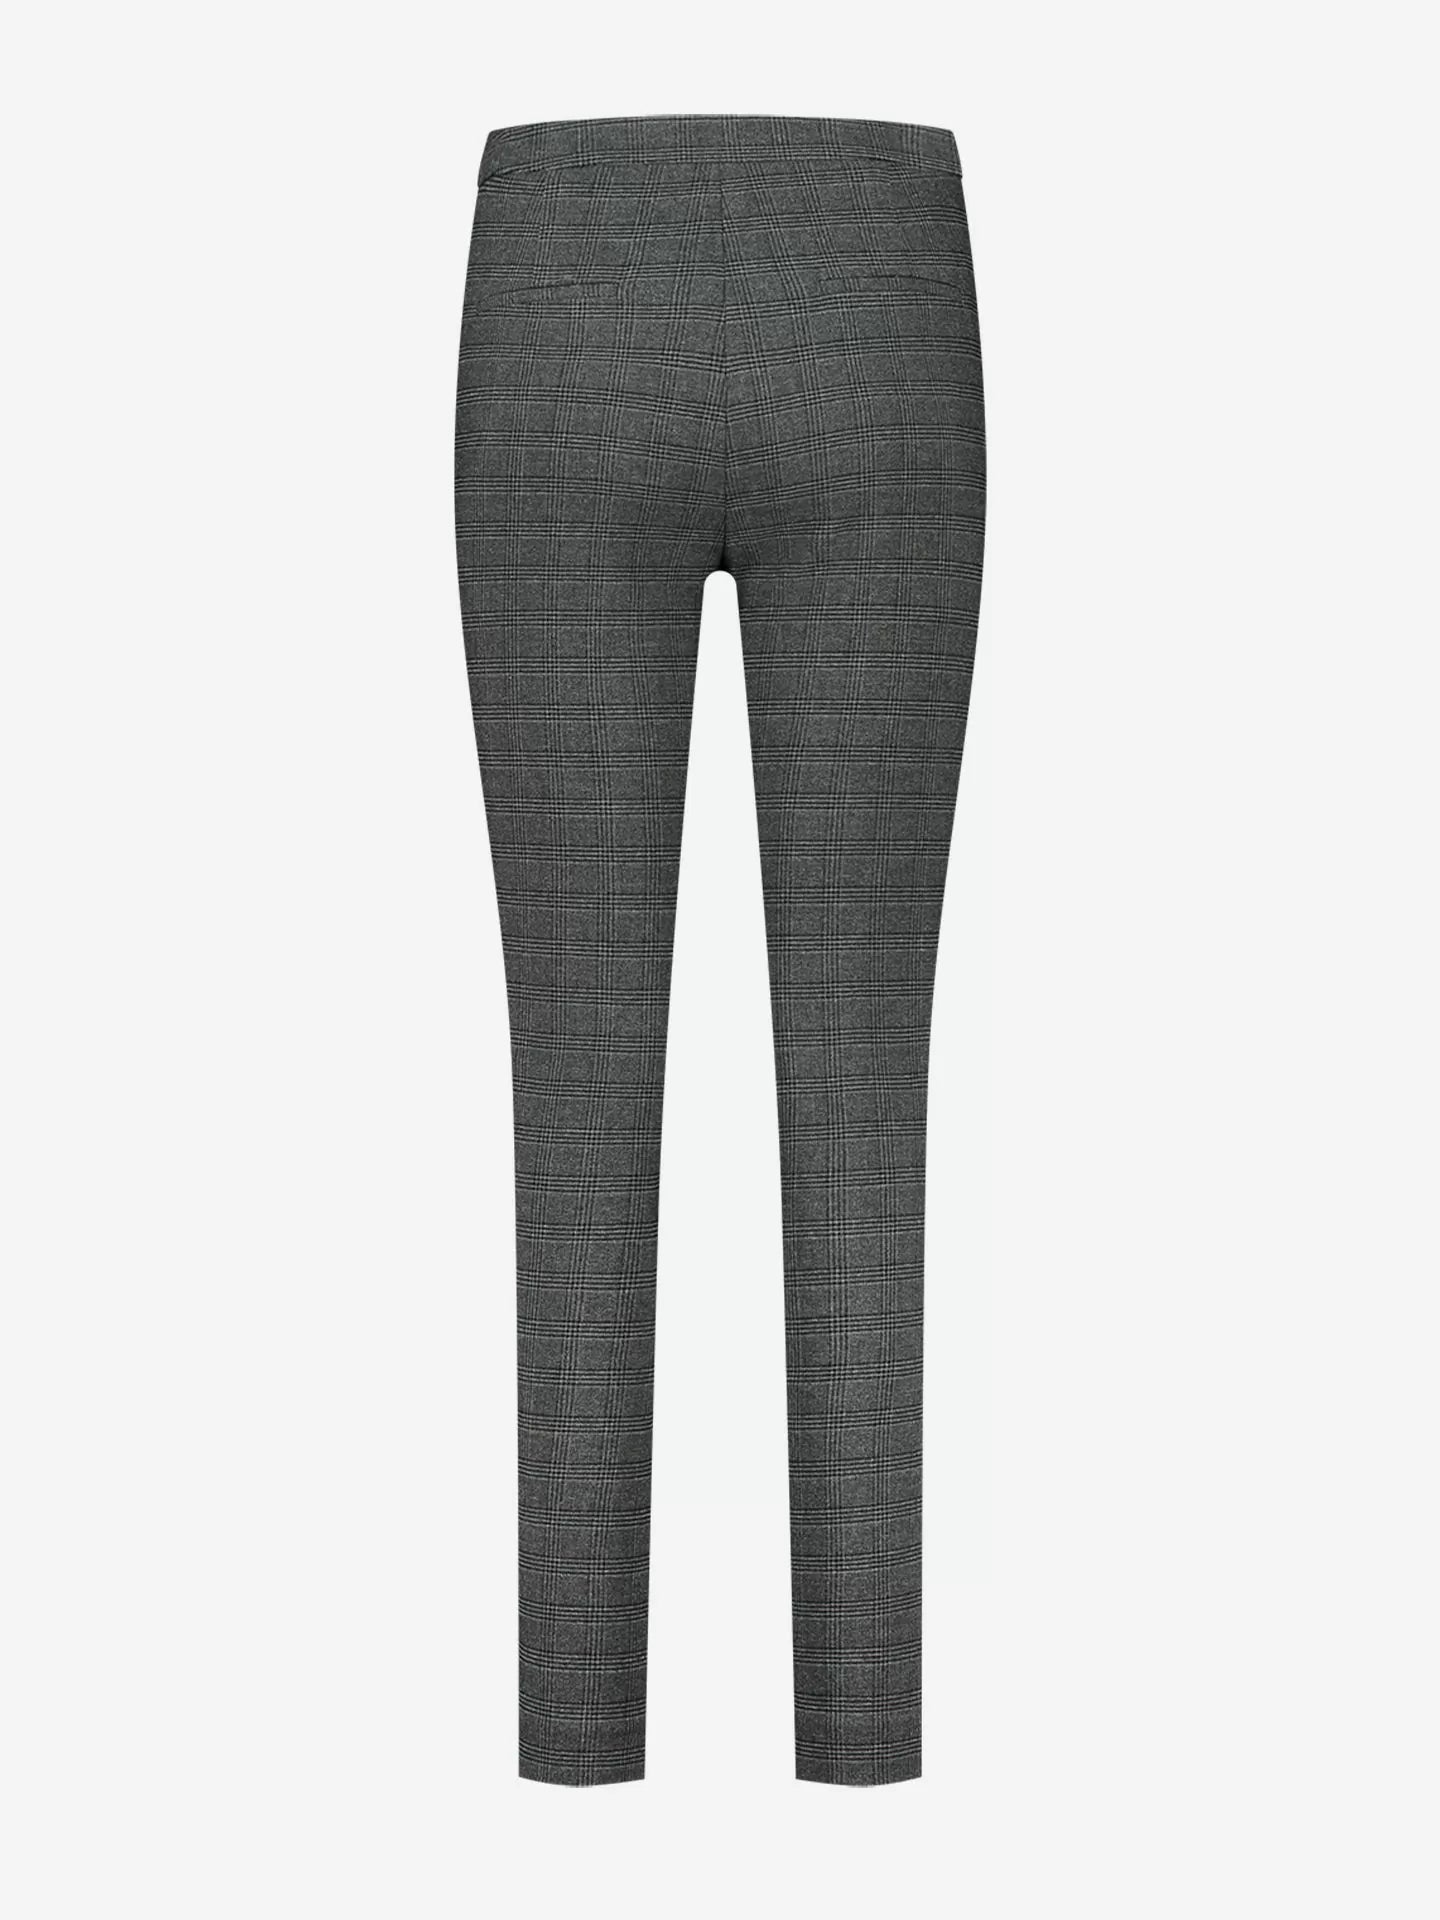 Nikkie Alaska pants - grey/black